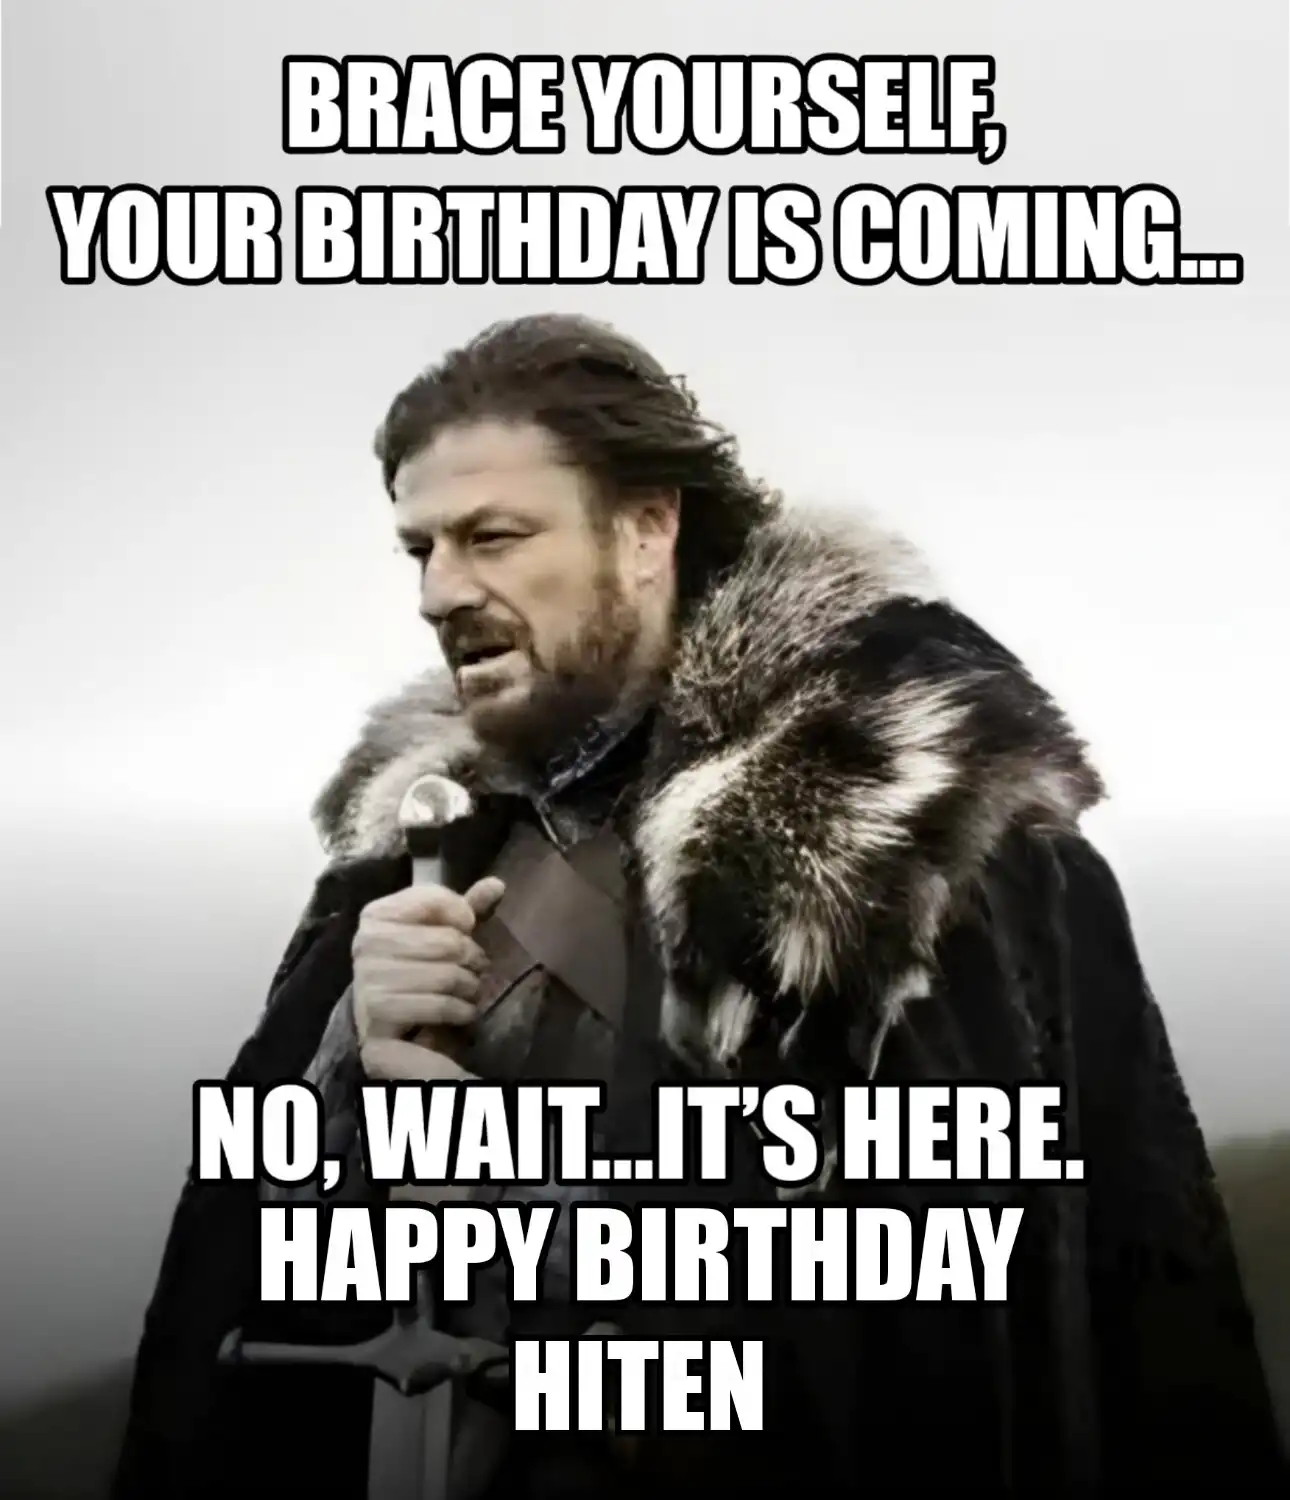 Happy Birthday Hiten Brace Yourself Your Birthday Is Coming Meme